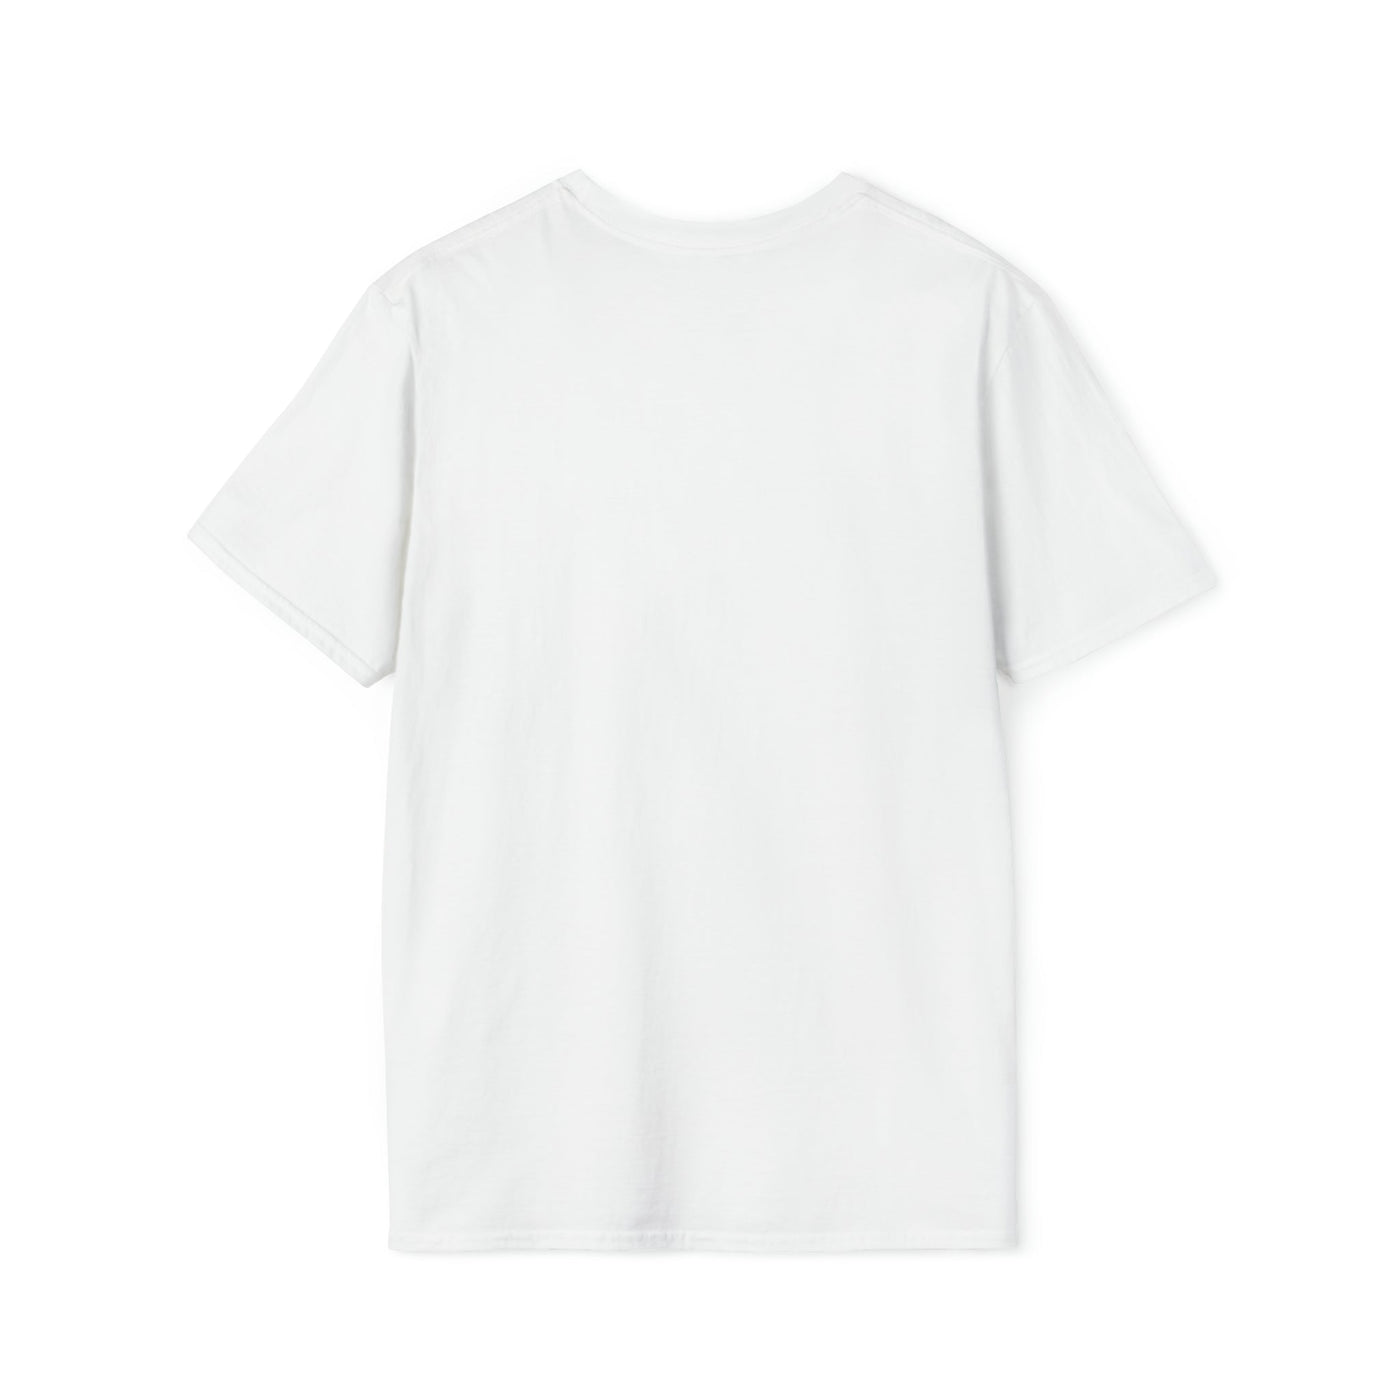 France Retro T-Shirt - Ezra's Clothing